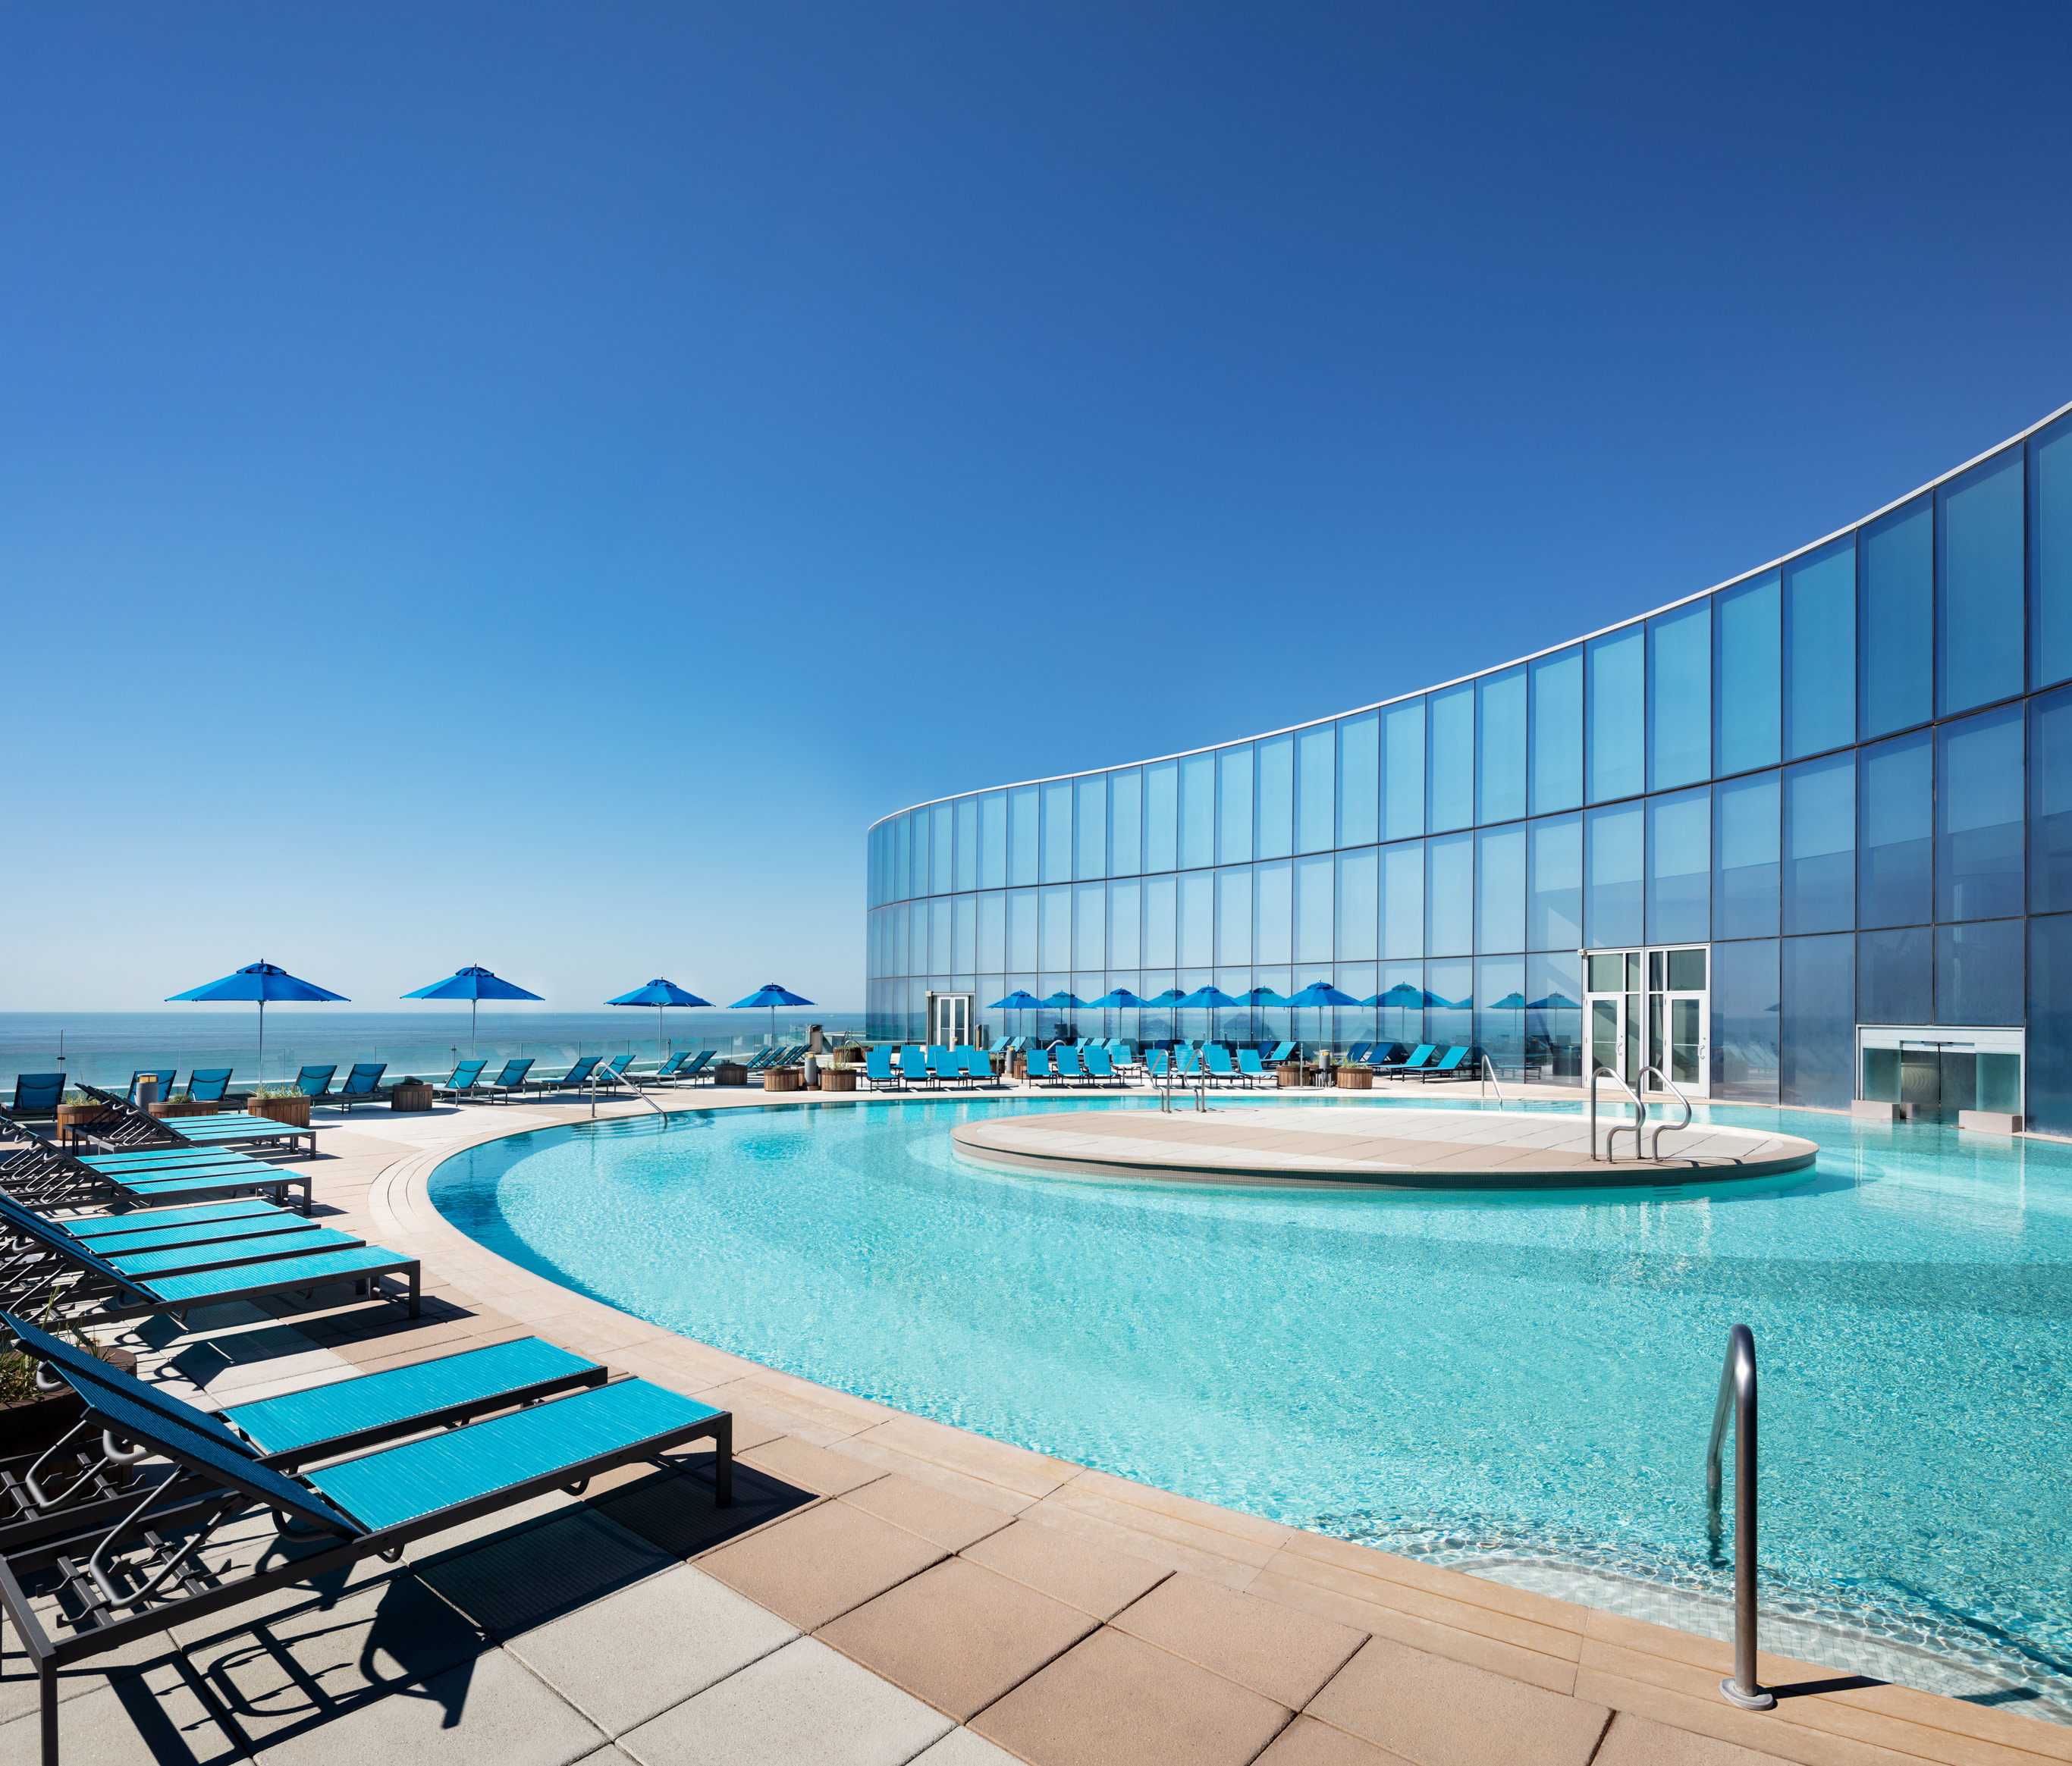 ocean casino resort pool hours